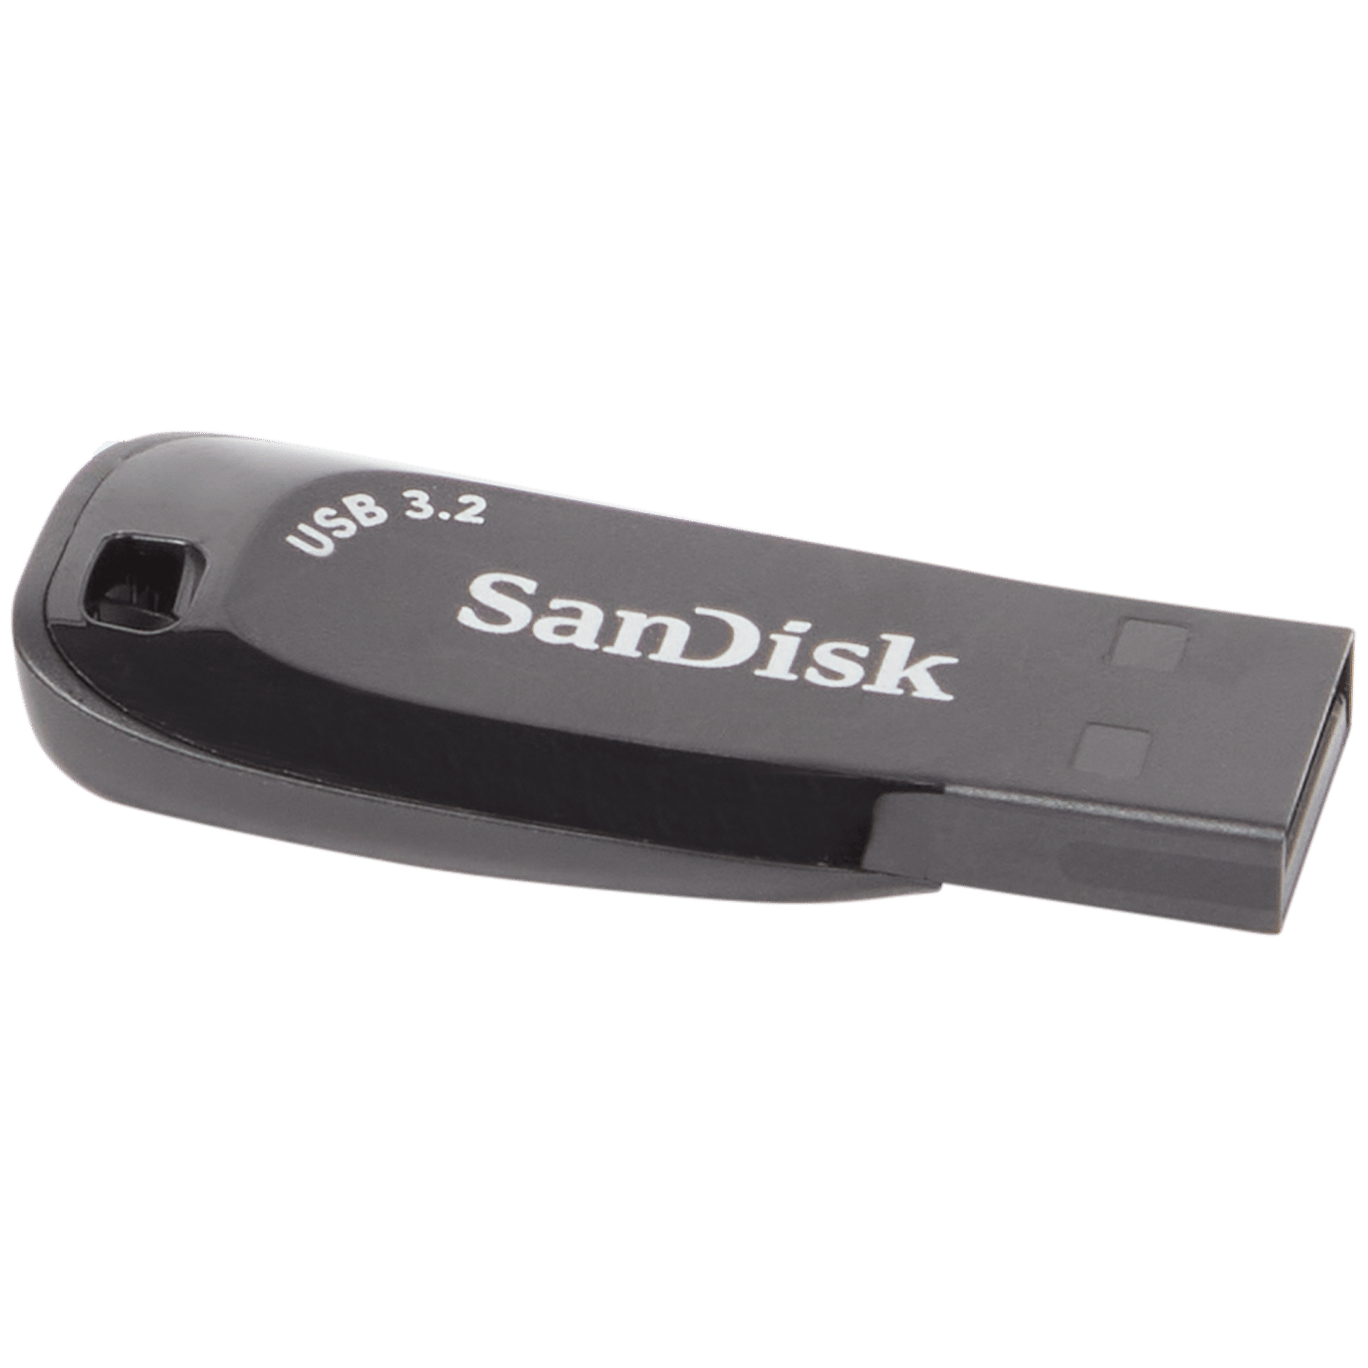 Memoria USB SanDisk Ultra Shift